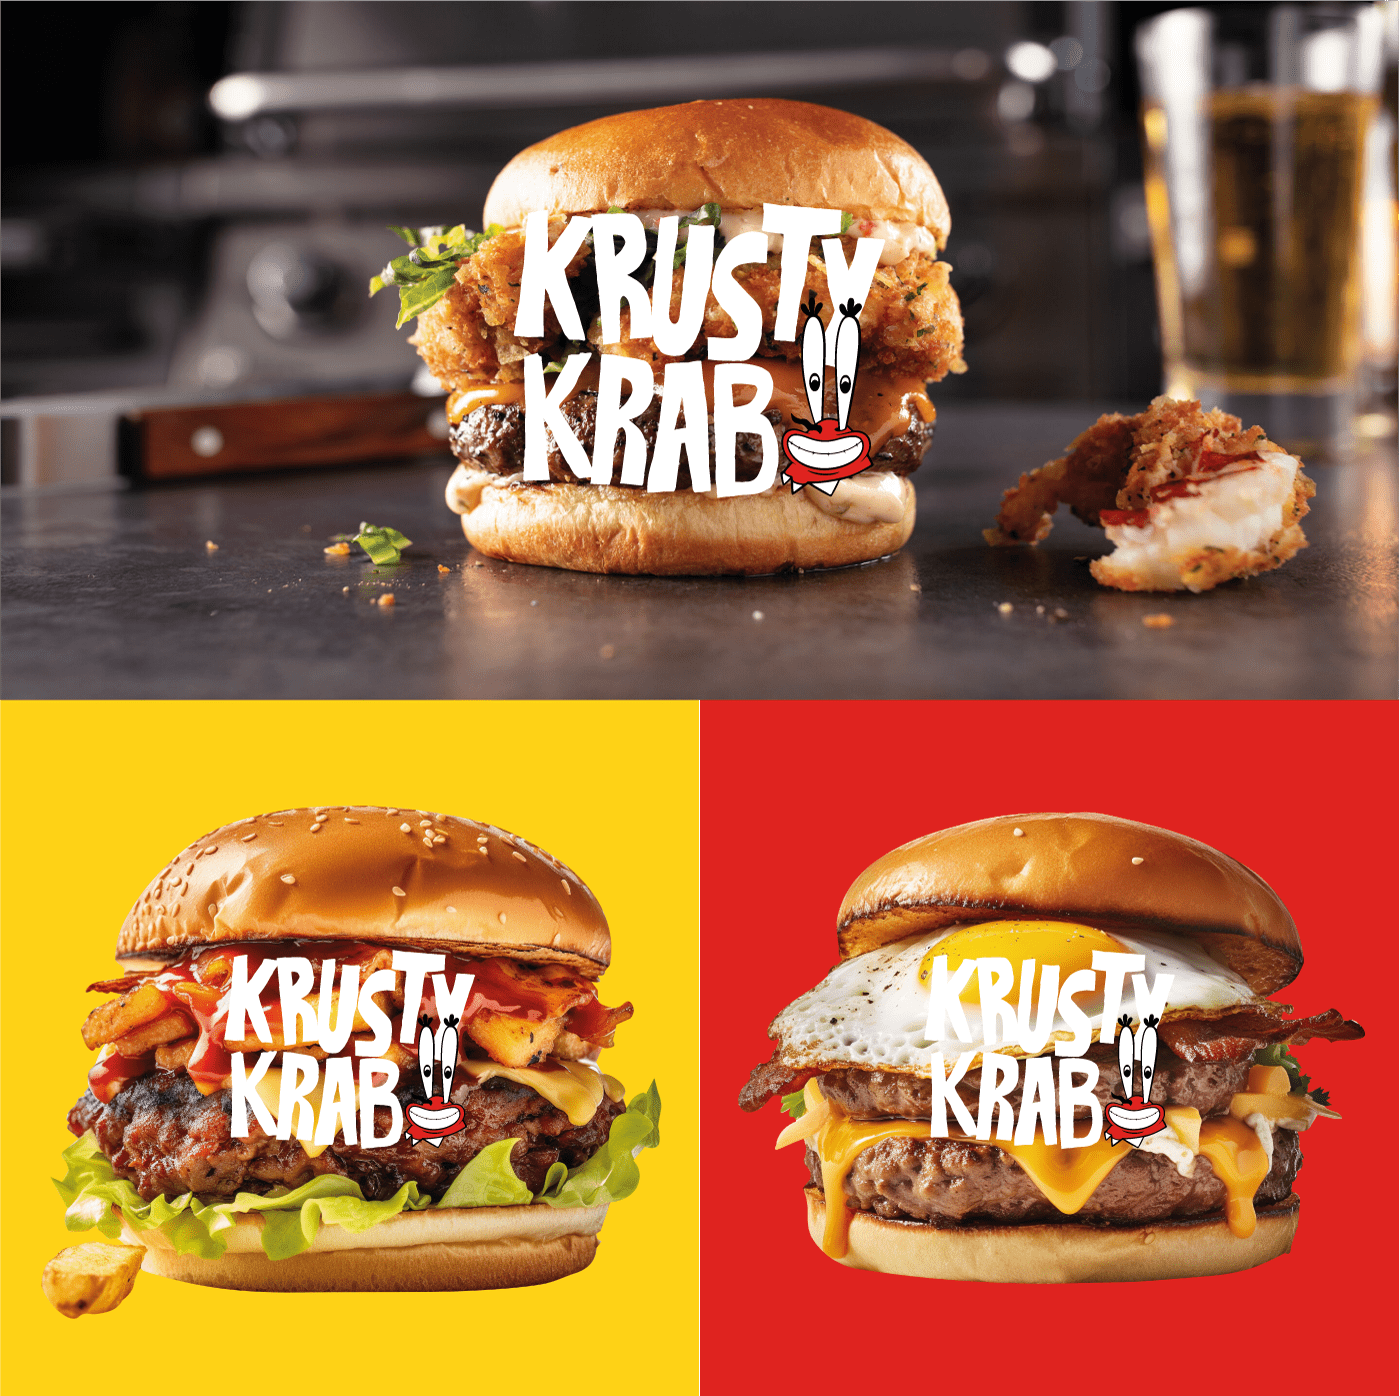 spongebob hamburguer Fast food rebranding Krusty Krab adobe illustrator visual identity brand Logo Design brand identity